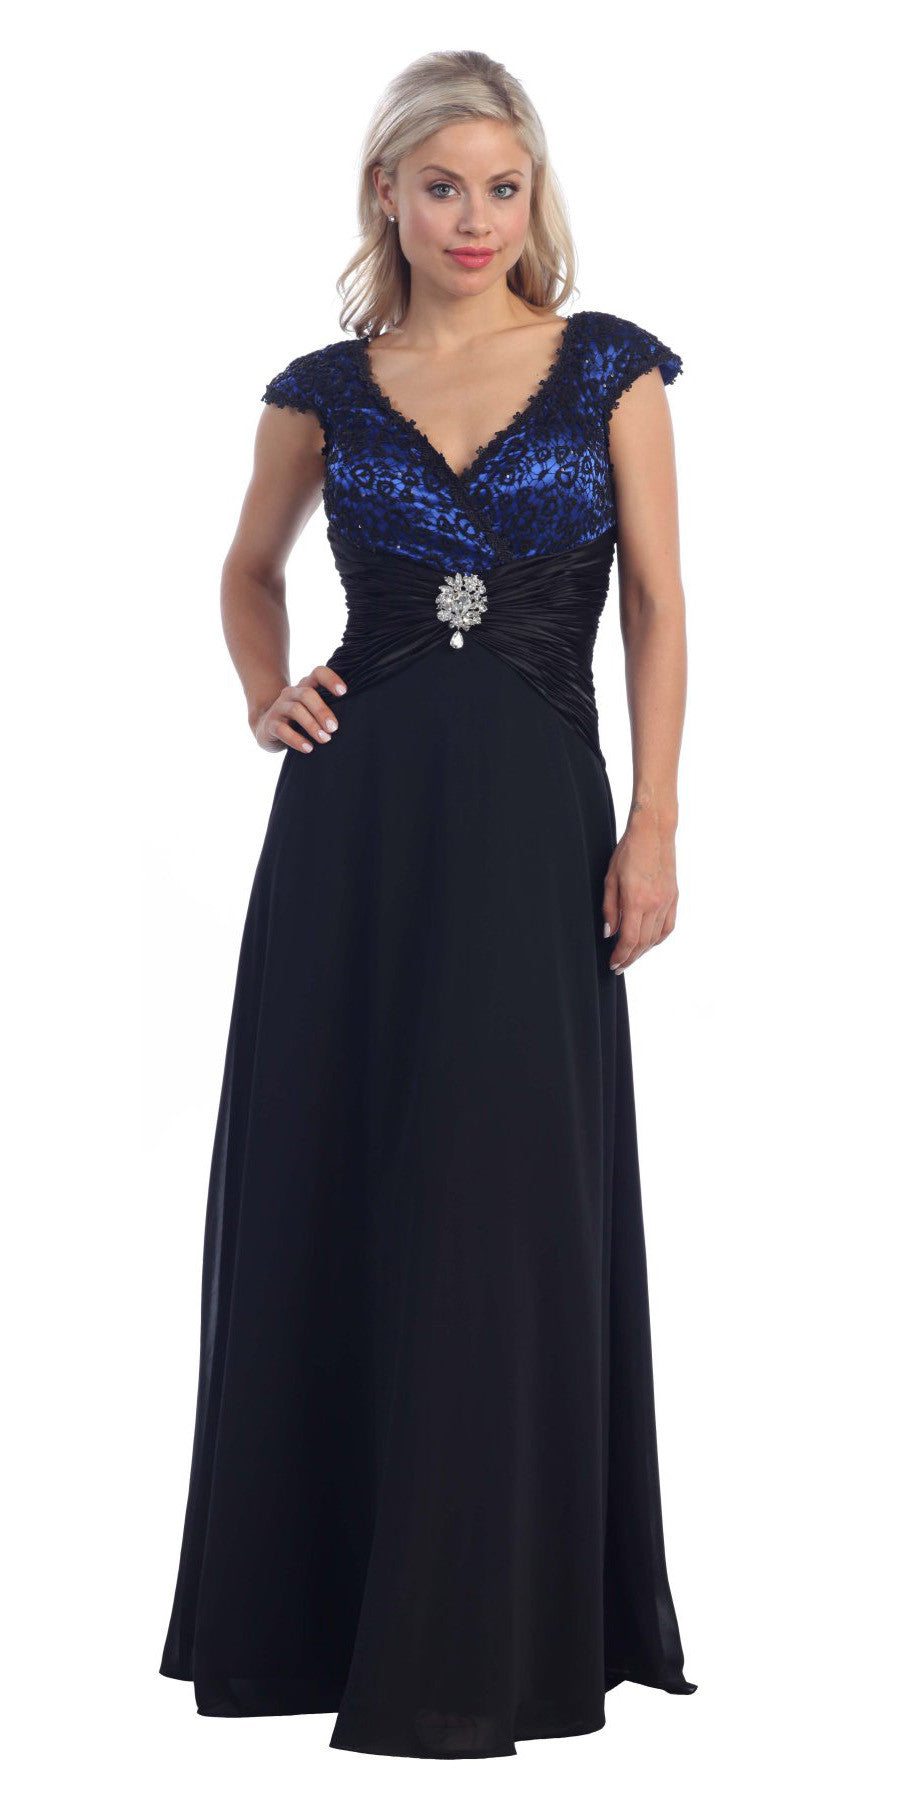 V Back/Neckline Royal Blue Dress Black Cap Sleeves Lace Overlay Gown